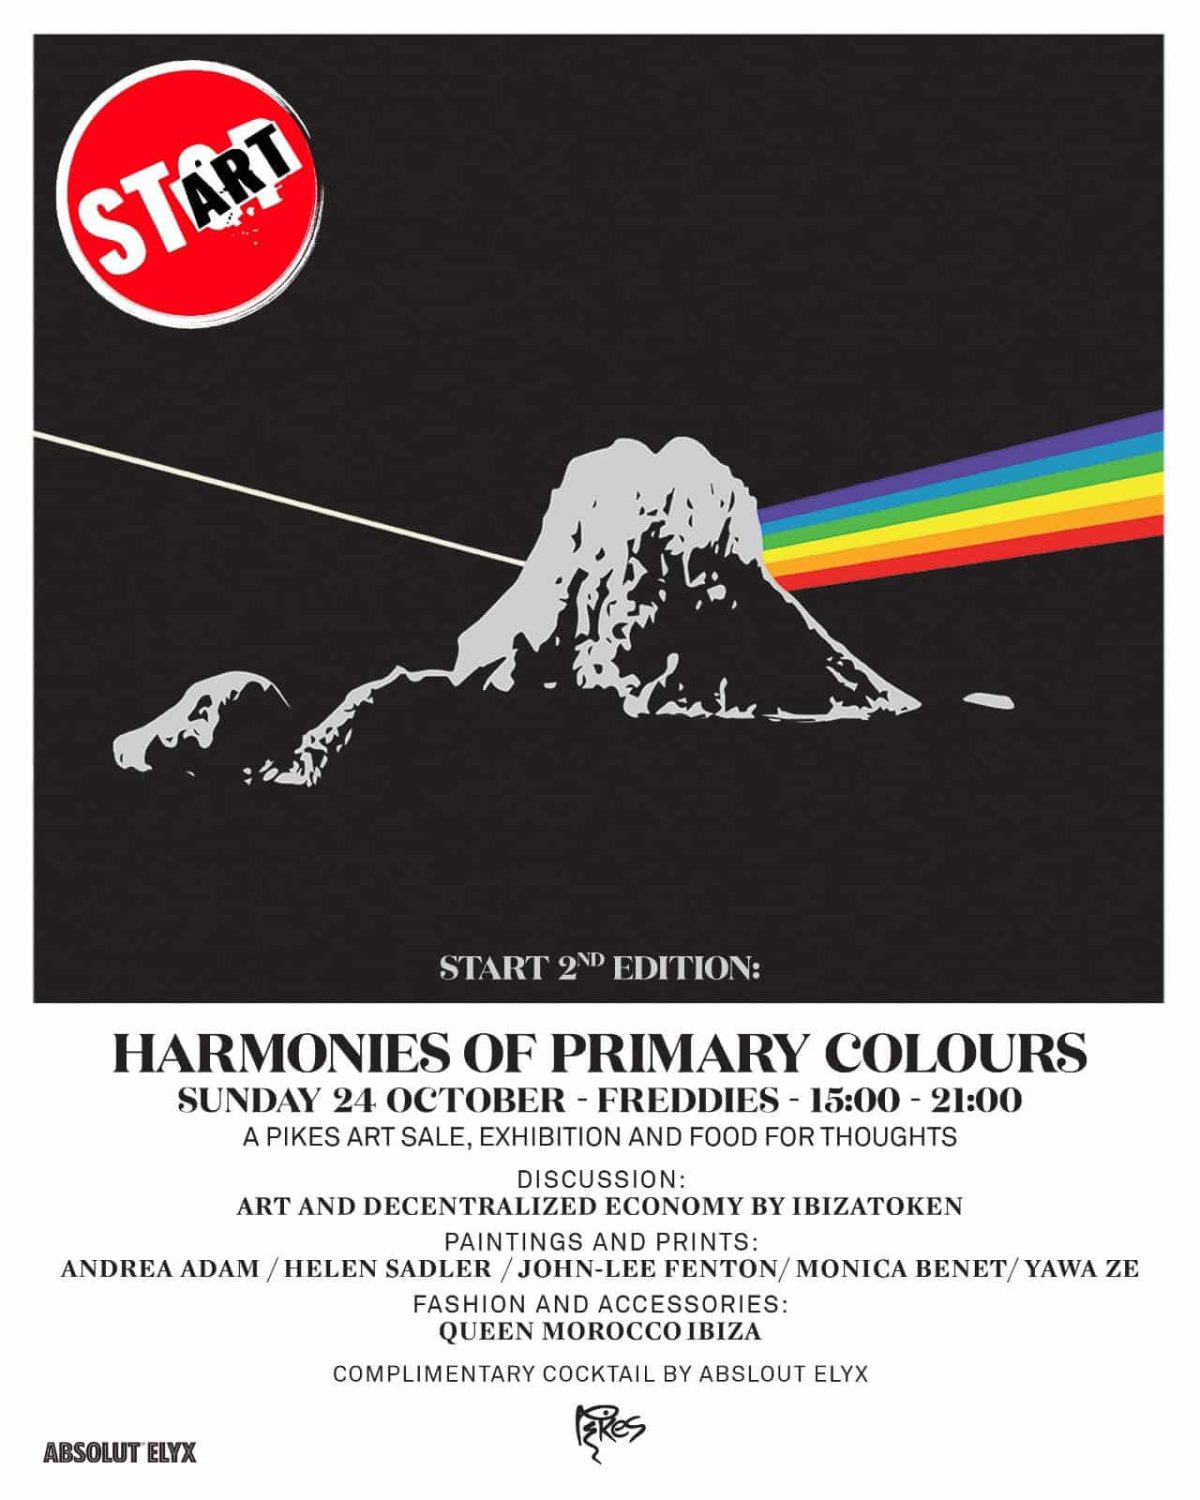 start-pikes-ibiza-harmonies-of-primary-colors-2021-welcometoibiza